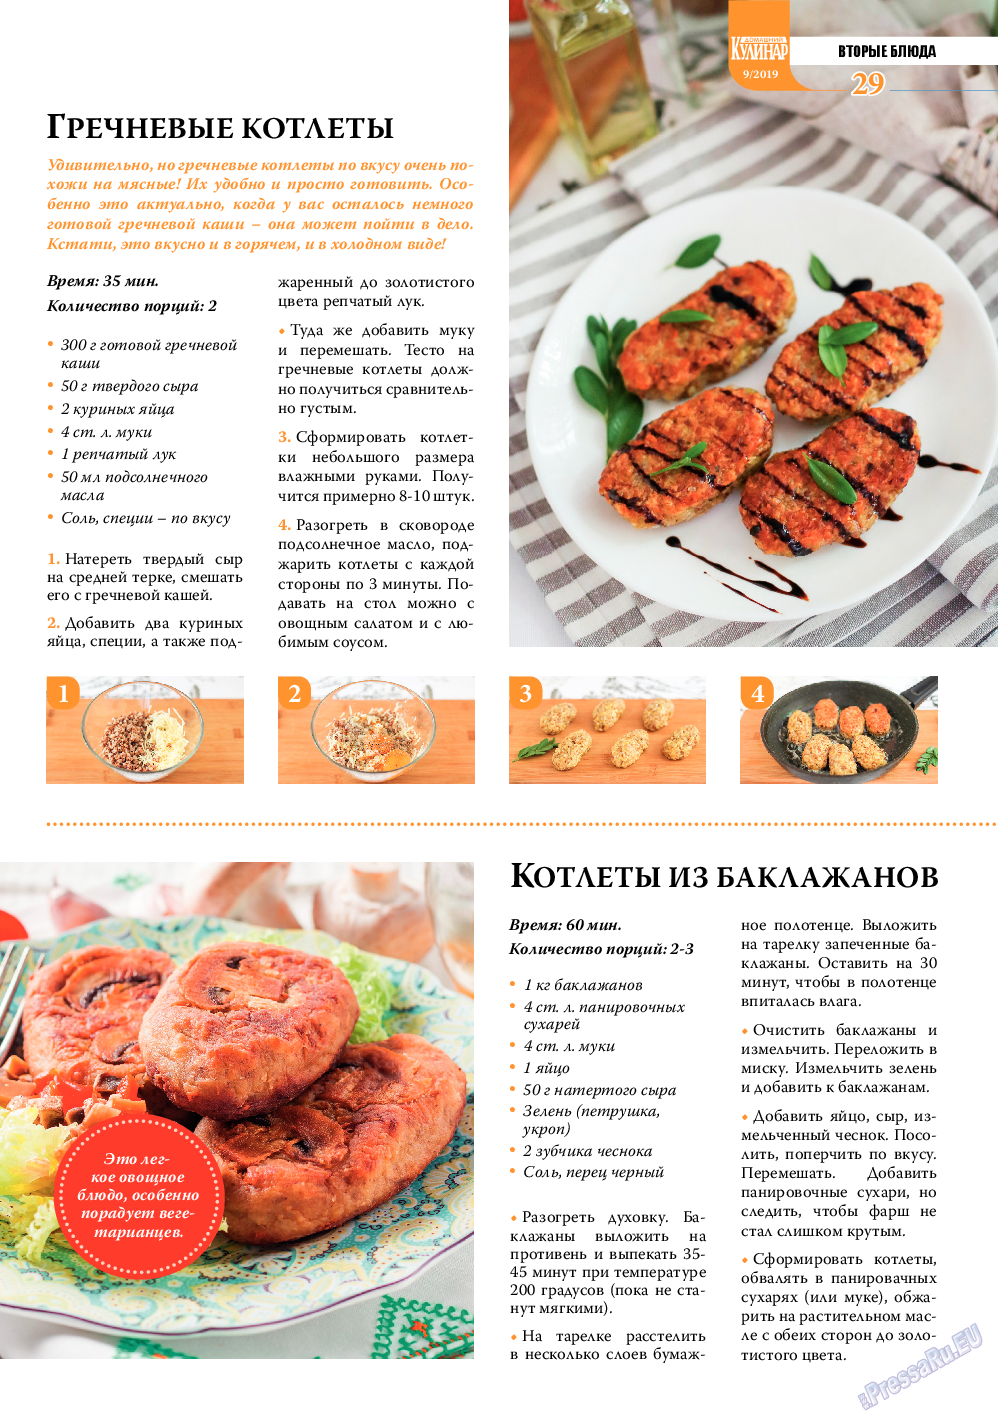 Домашний кулинар (журнал). 2019 год, номер 9, стр. 29